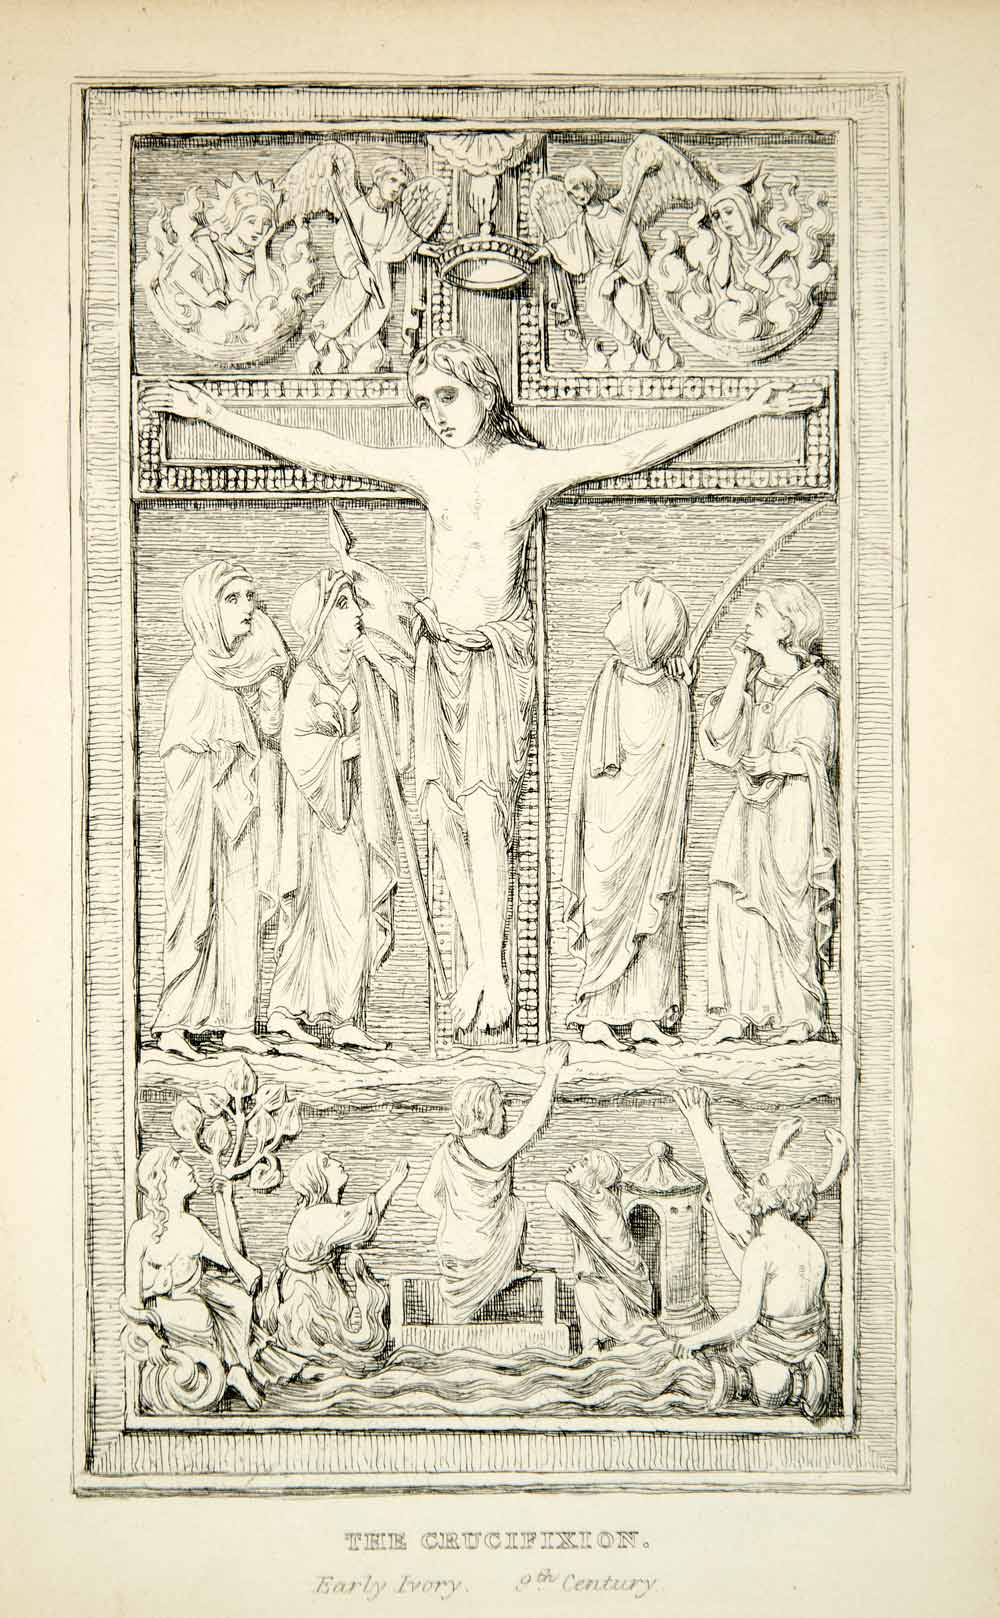 1872 Photolithograph Jesus Christ Crucifixion Cross 9th Century Religious XAEA1